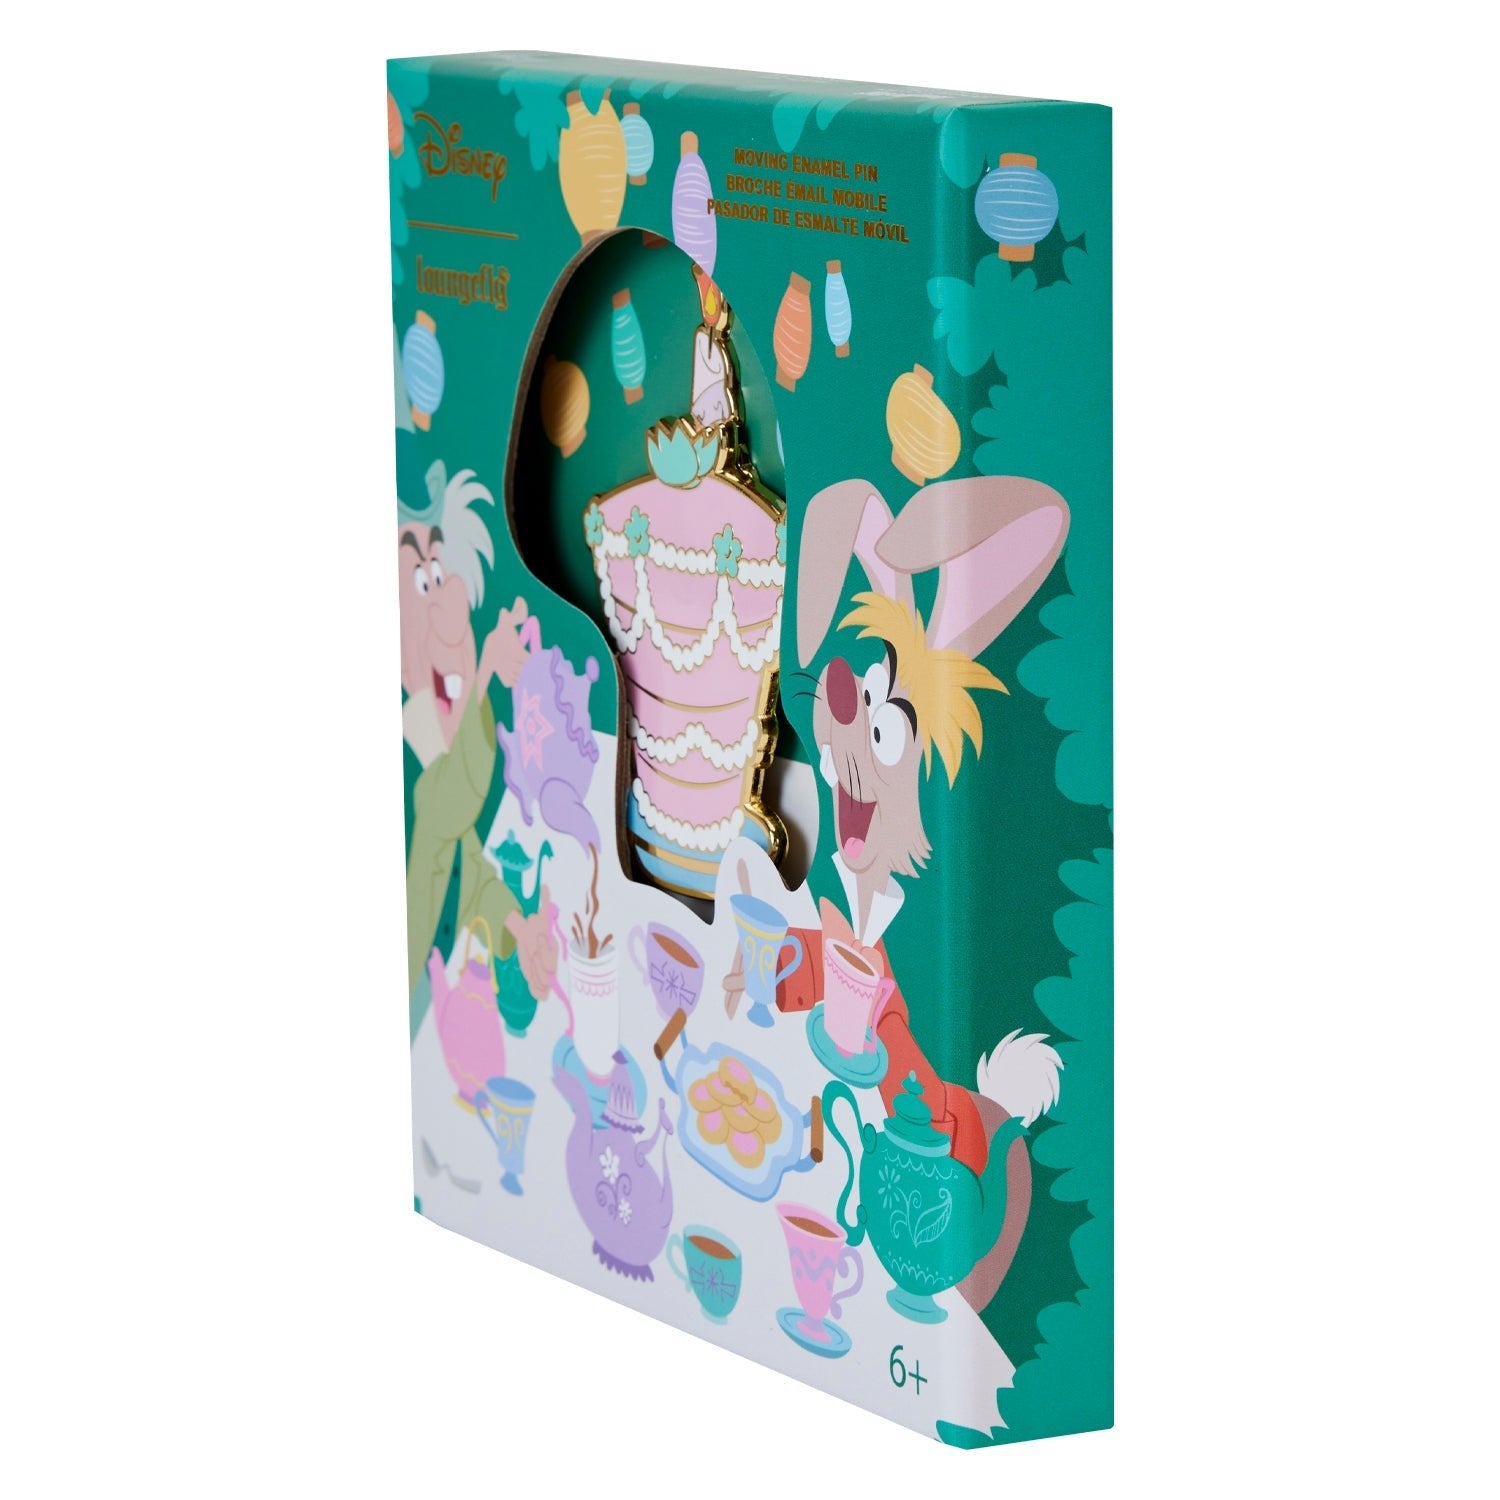 Loungefly x Disney Alice in Wonderland Unbirthday Cake Sliding 3 Inch Pin - GeekCore